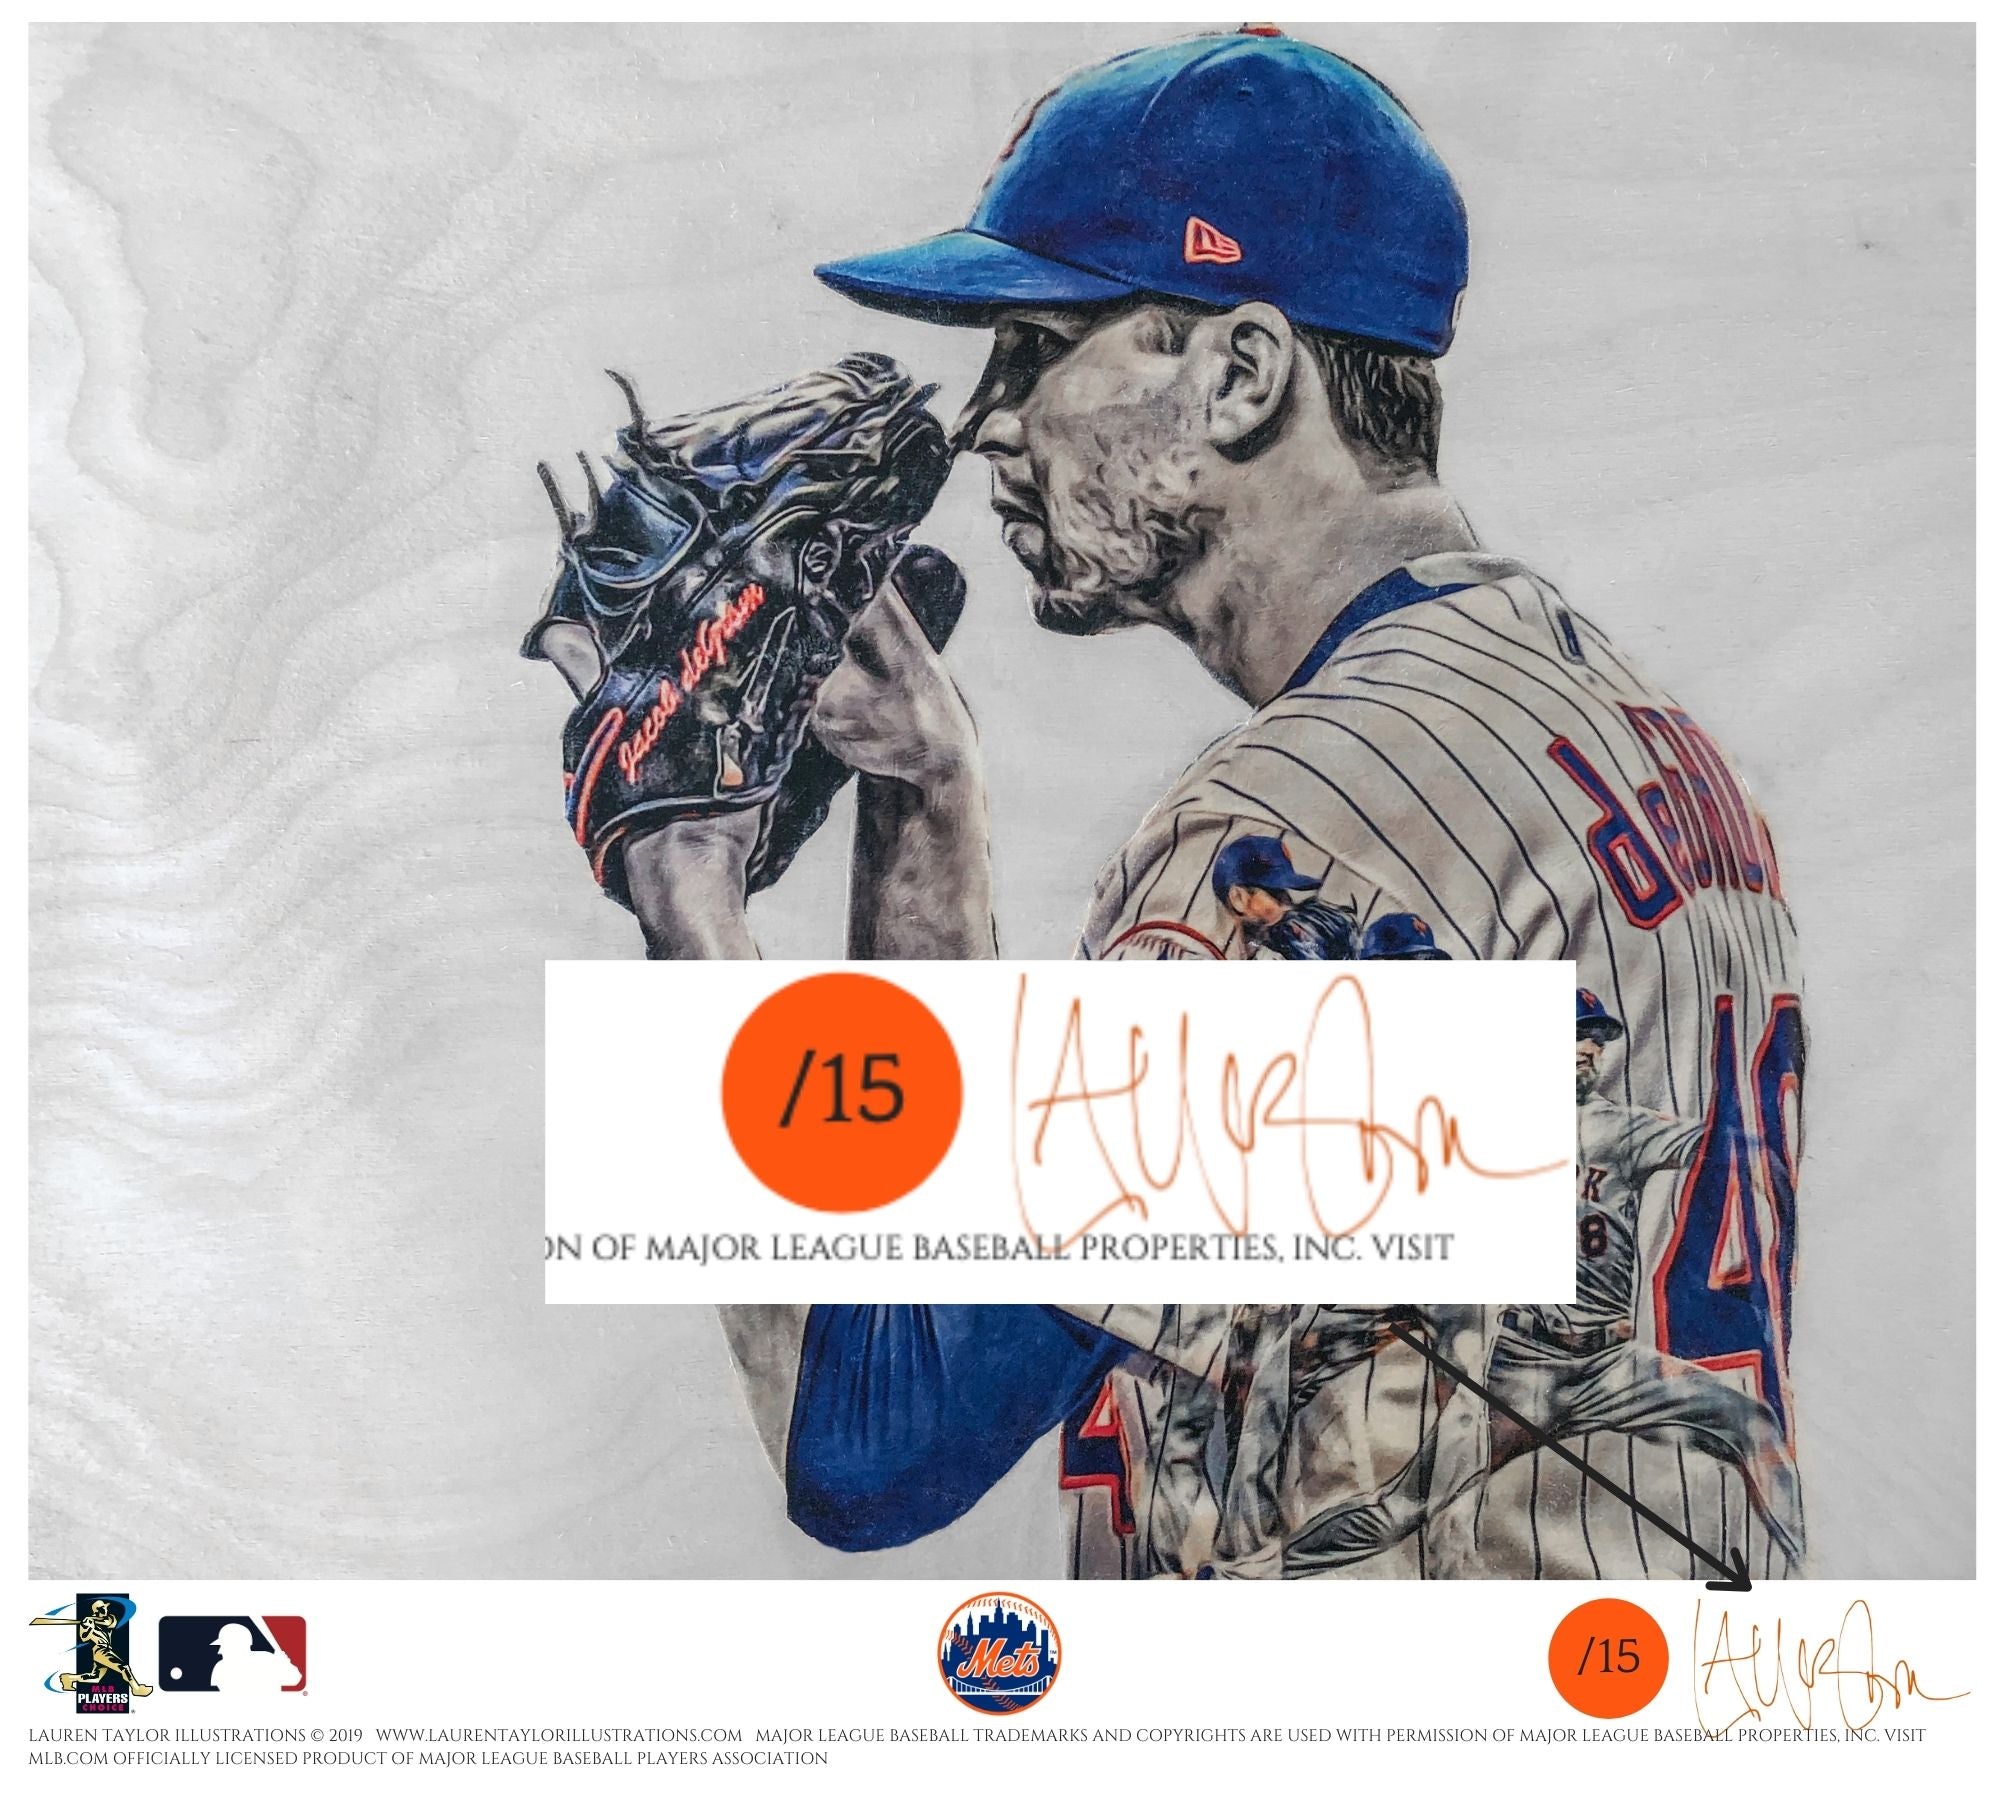 "deGrominator" (Jacob deGrominator) New York Mets - Officially Licensed MLB Print - ORANGE ARTIST SIGNATURE Limited Release /15